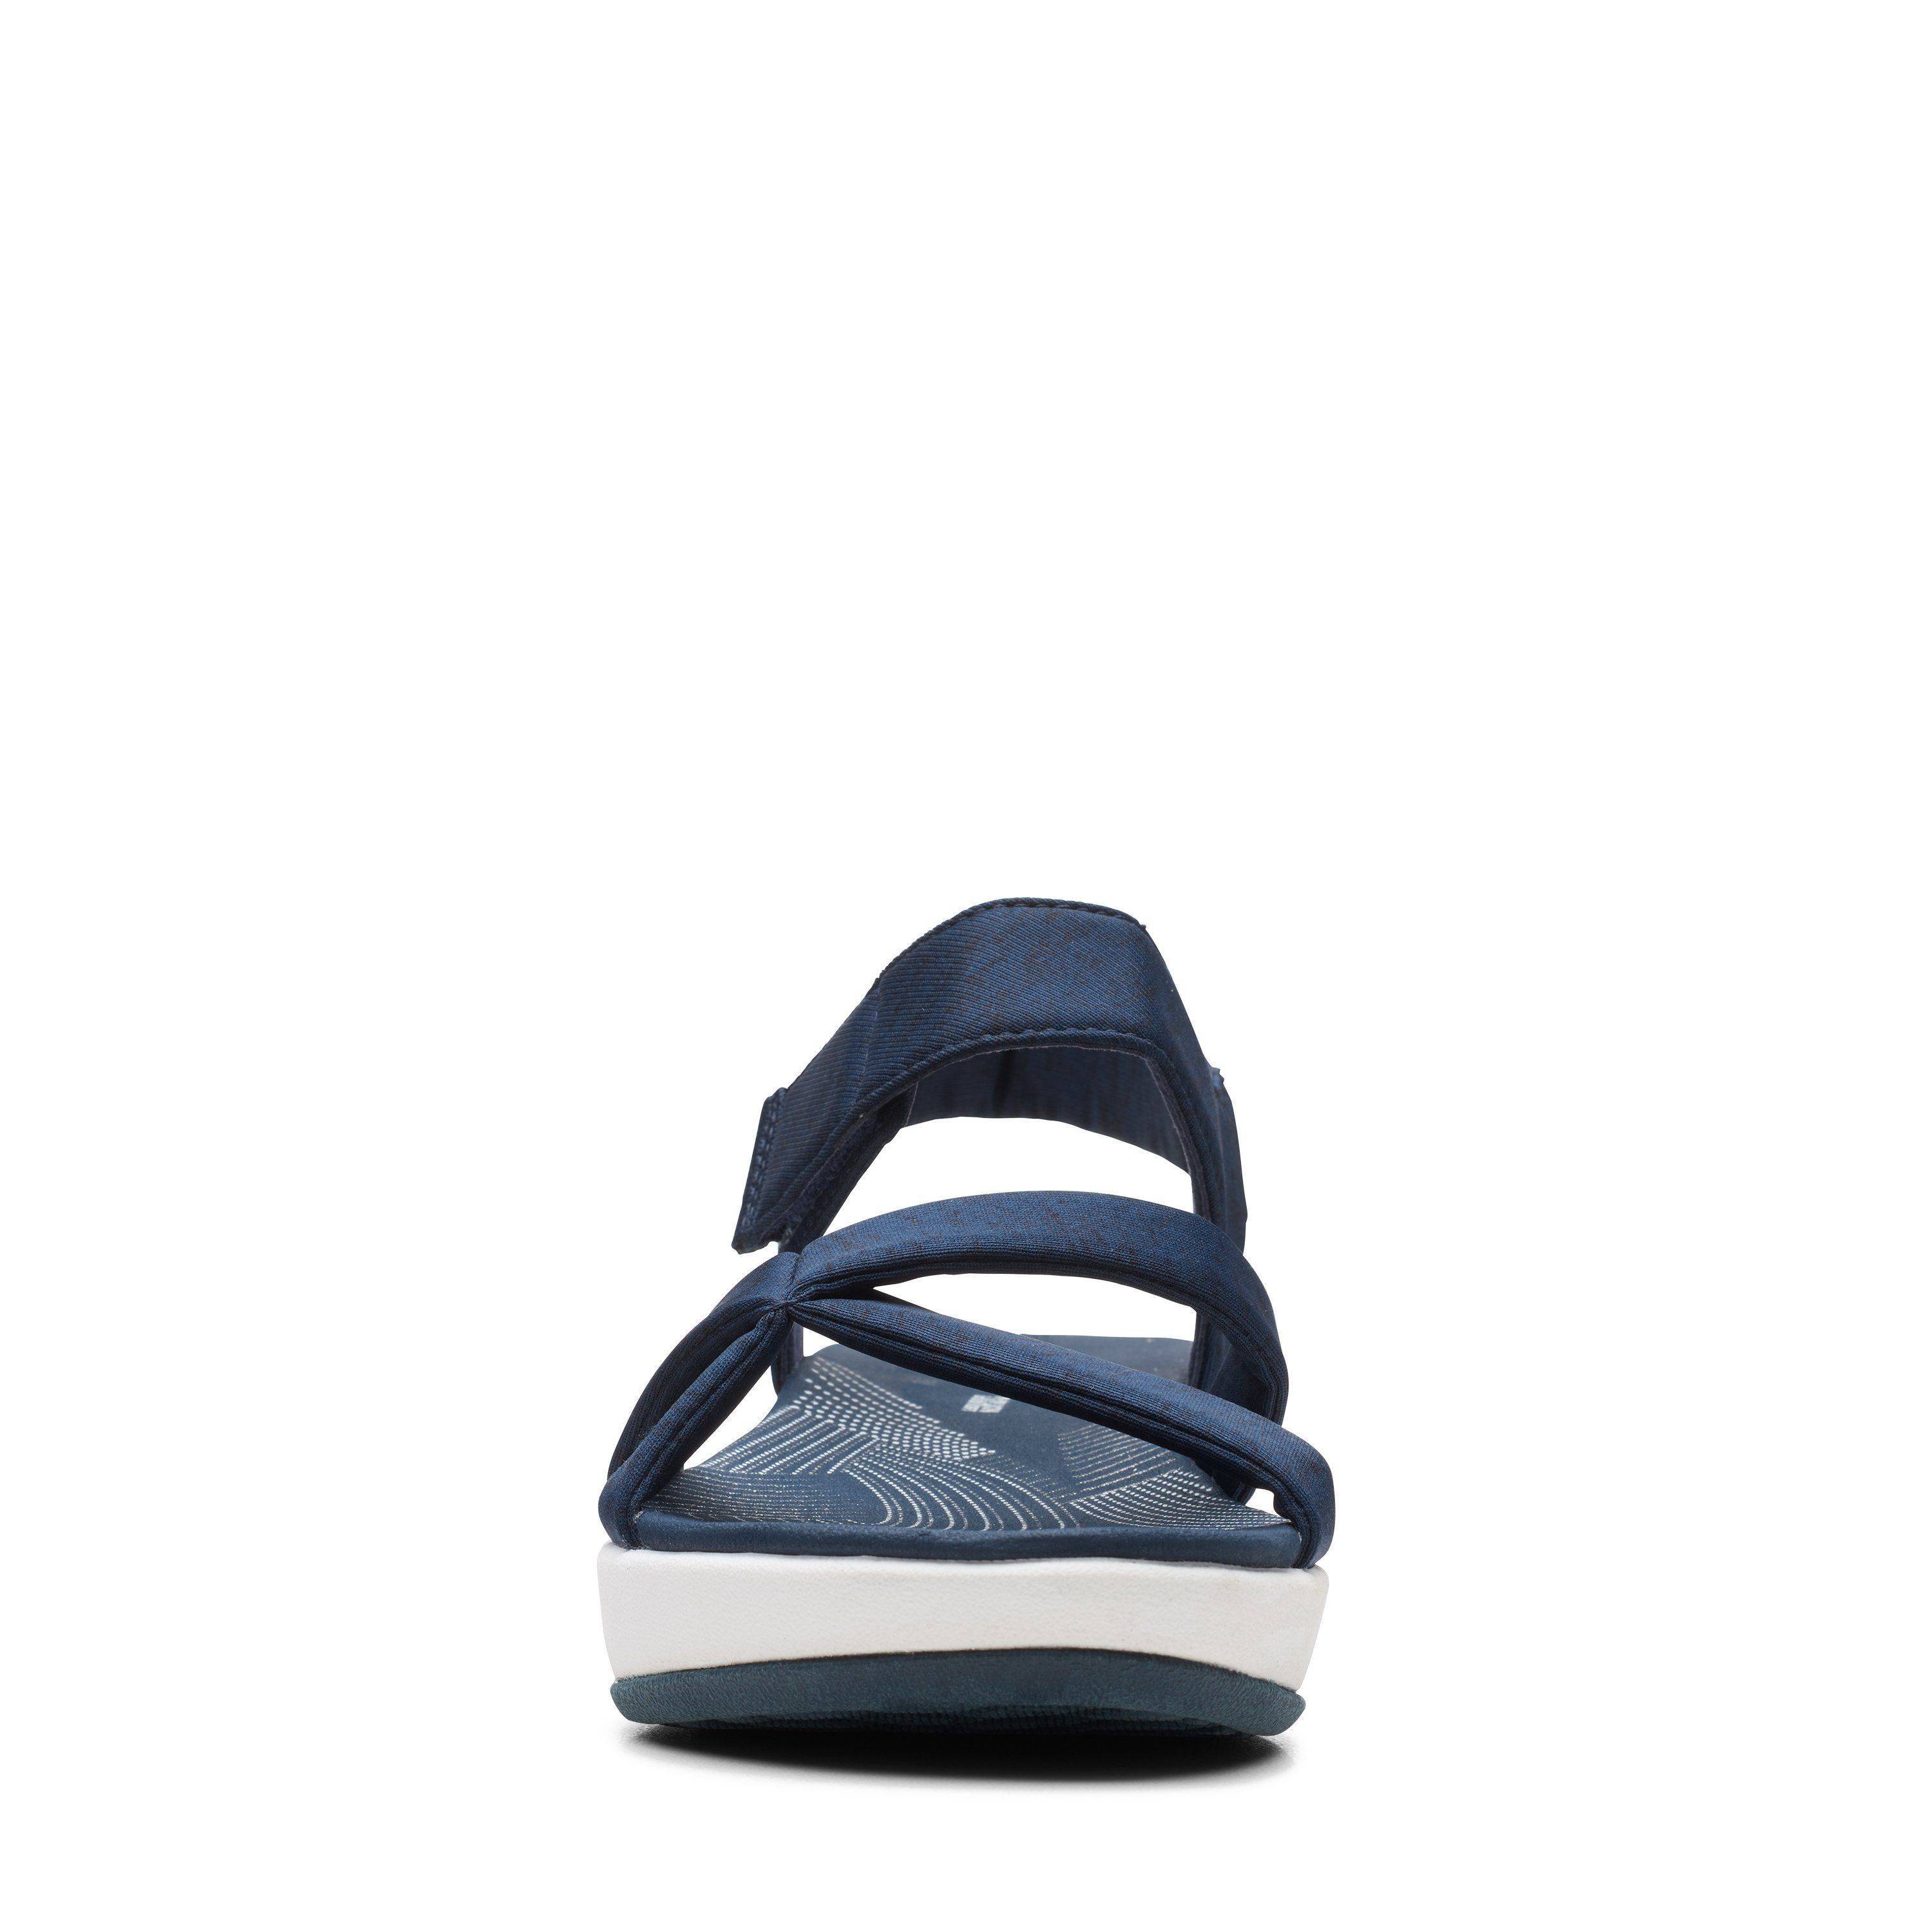 Женские сандалии Clarks, синие, цвет синий, размер 41 - фото 3